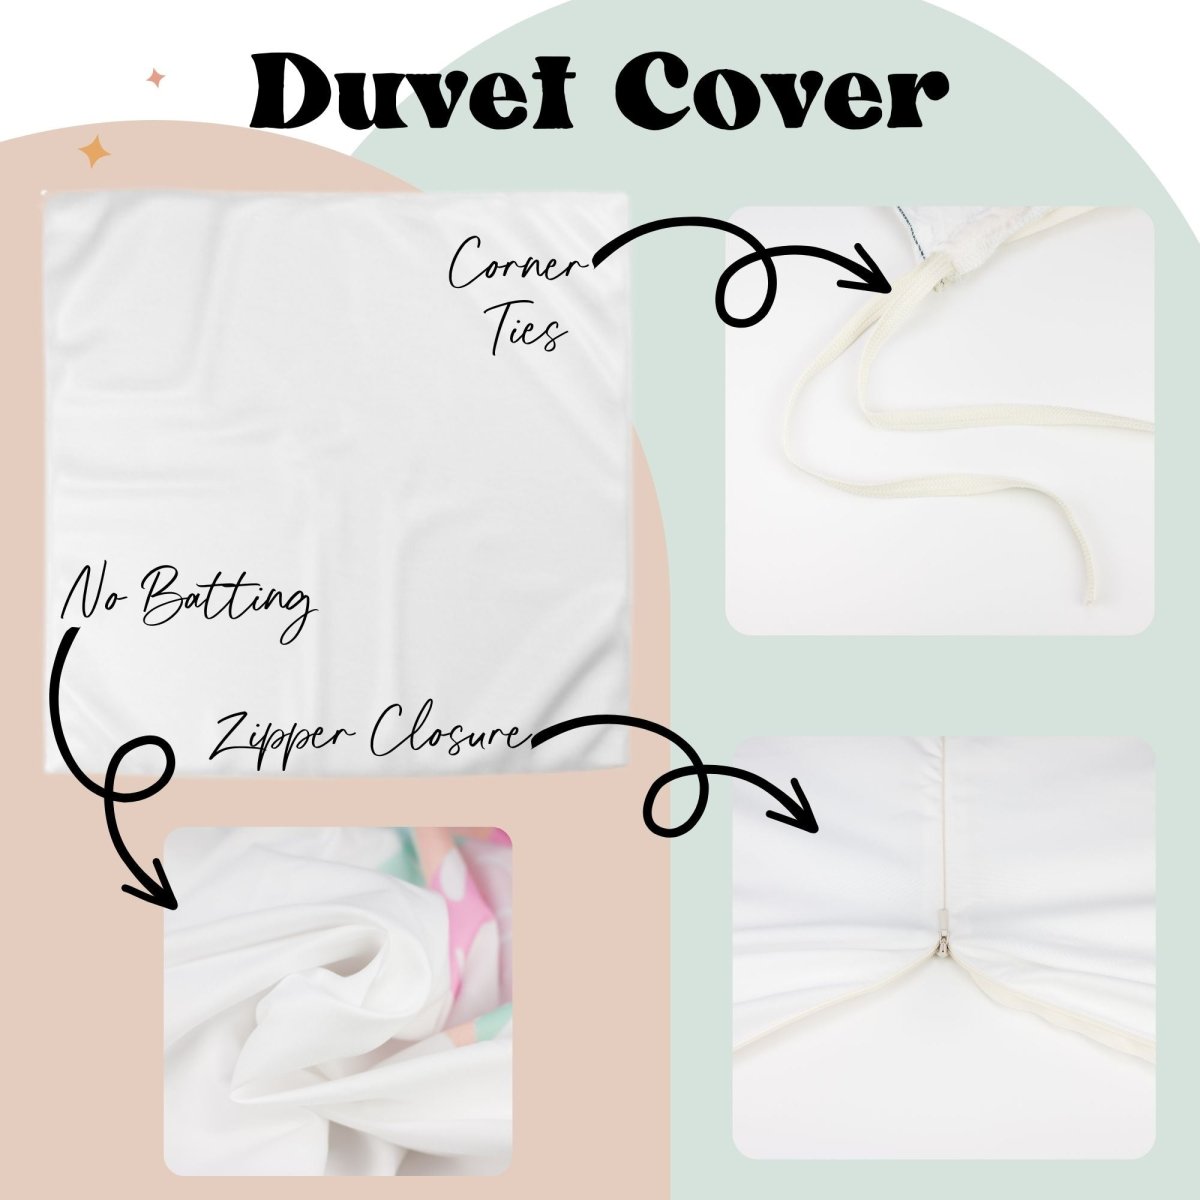 Swan Lake Floral Kids Bedding Set (Comforter or Duvet Cover) - gender_girl, Swan Lake, text